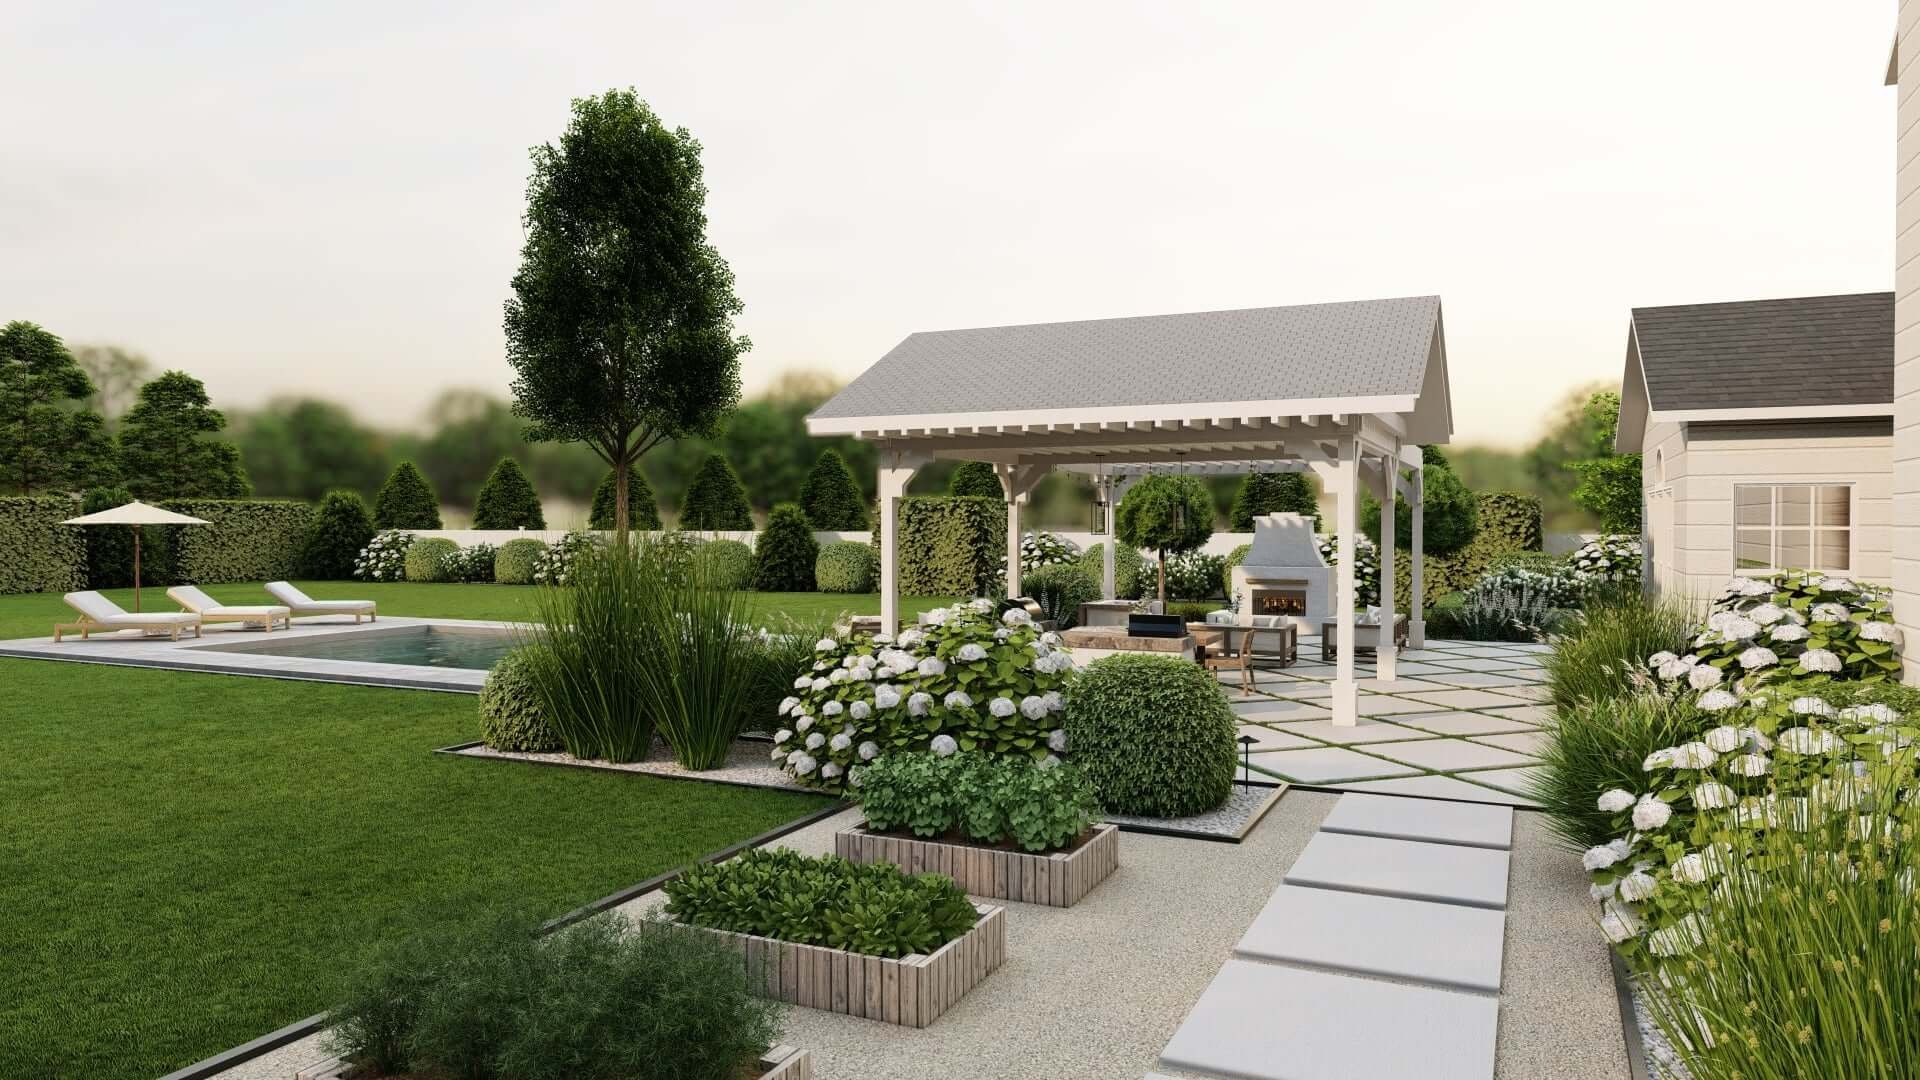 2’ x 4’ pre-fab raised beds in Princeton, New Jersey backyard landscape design